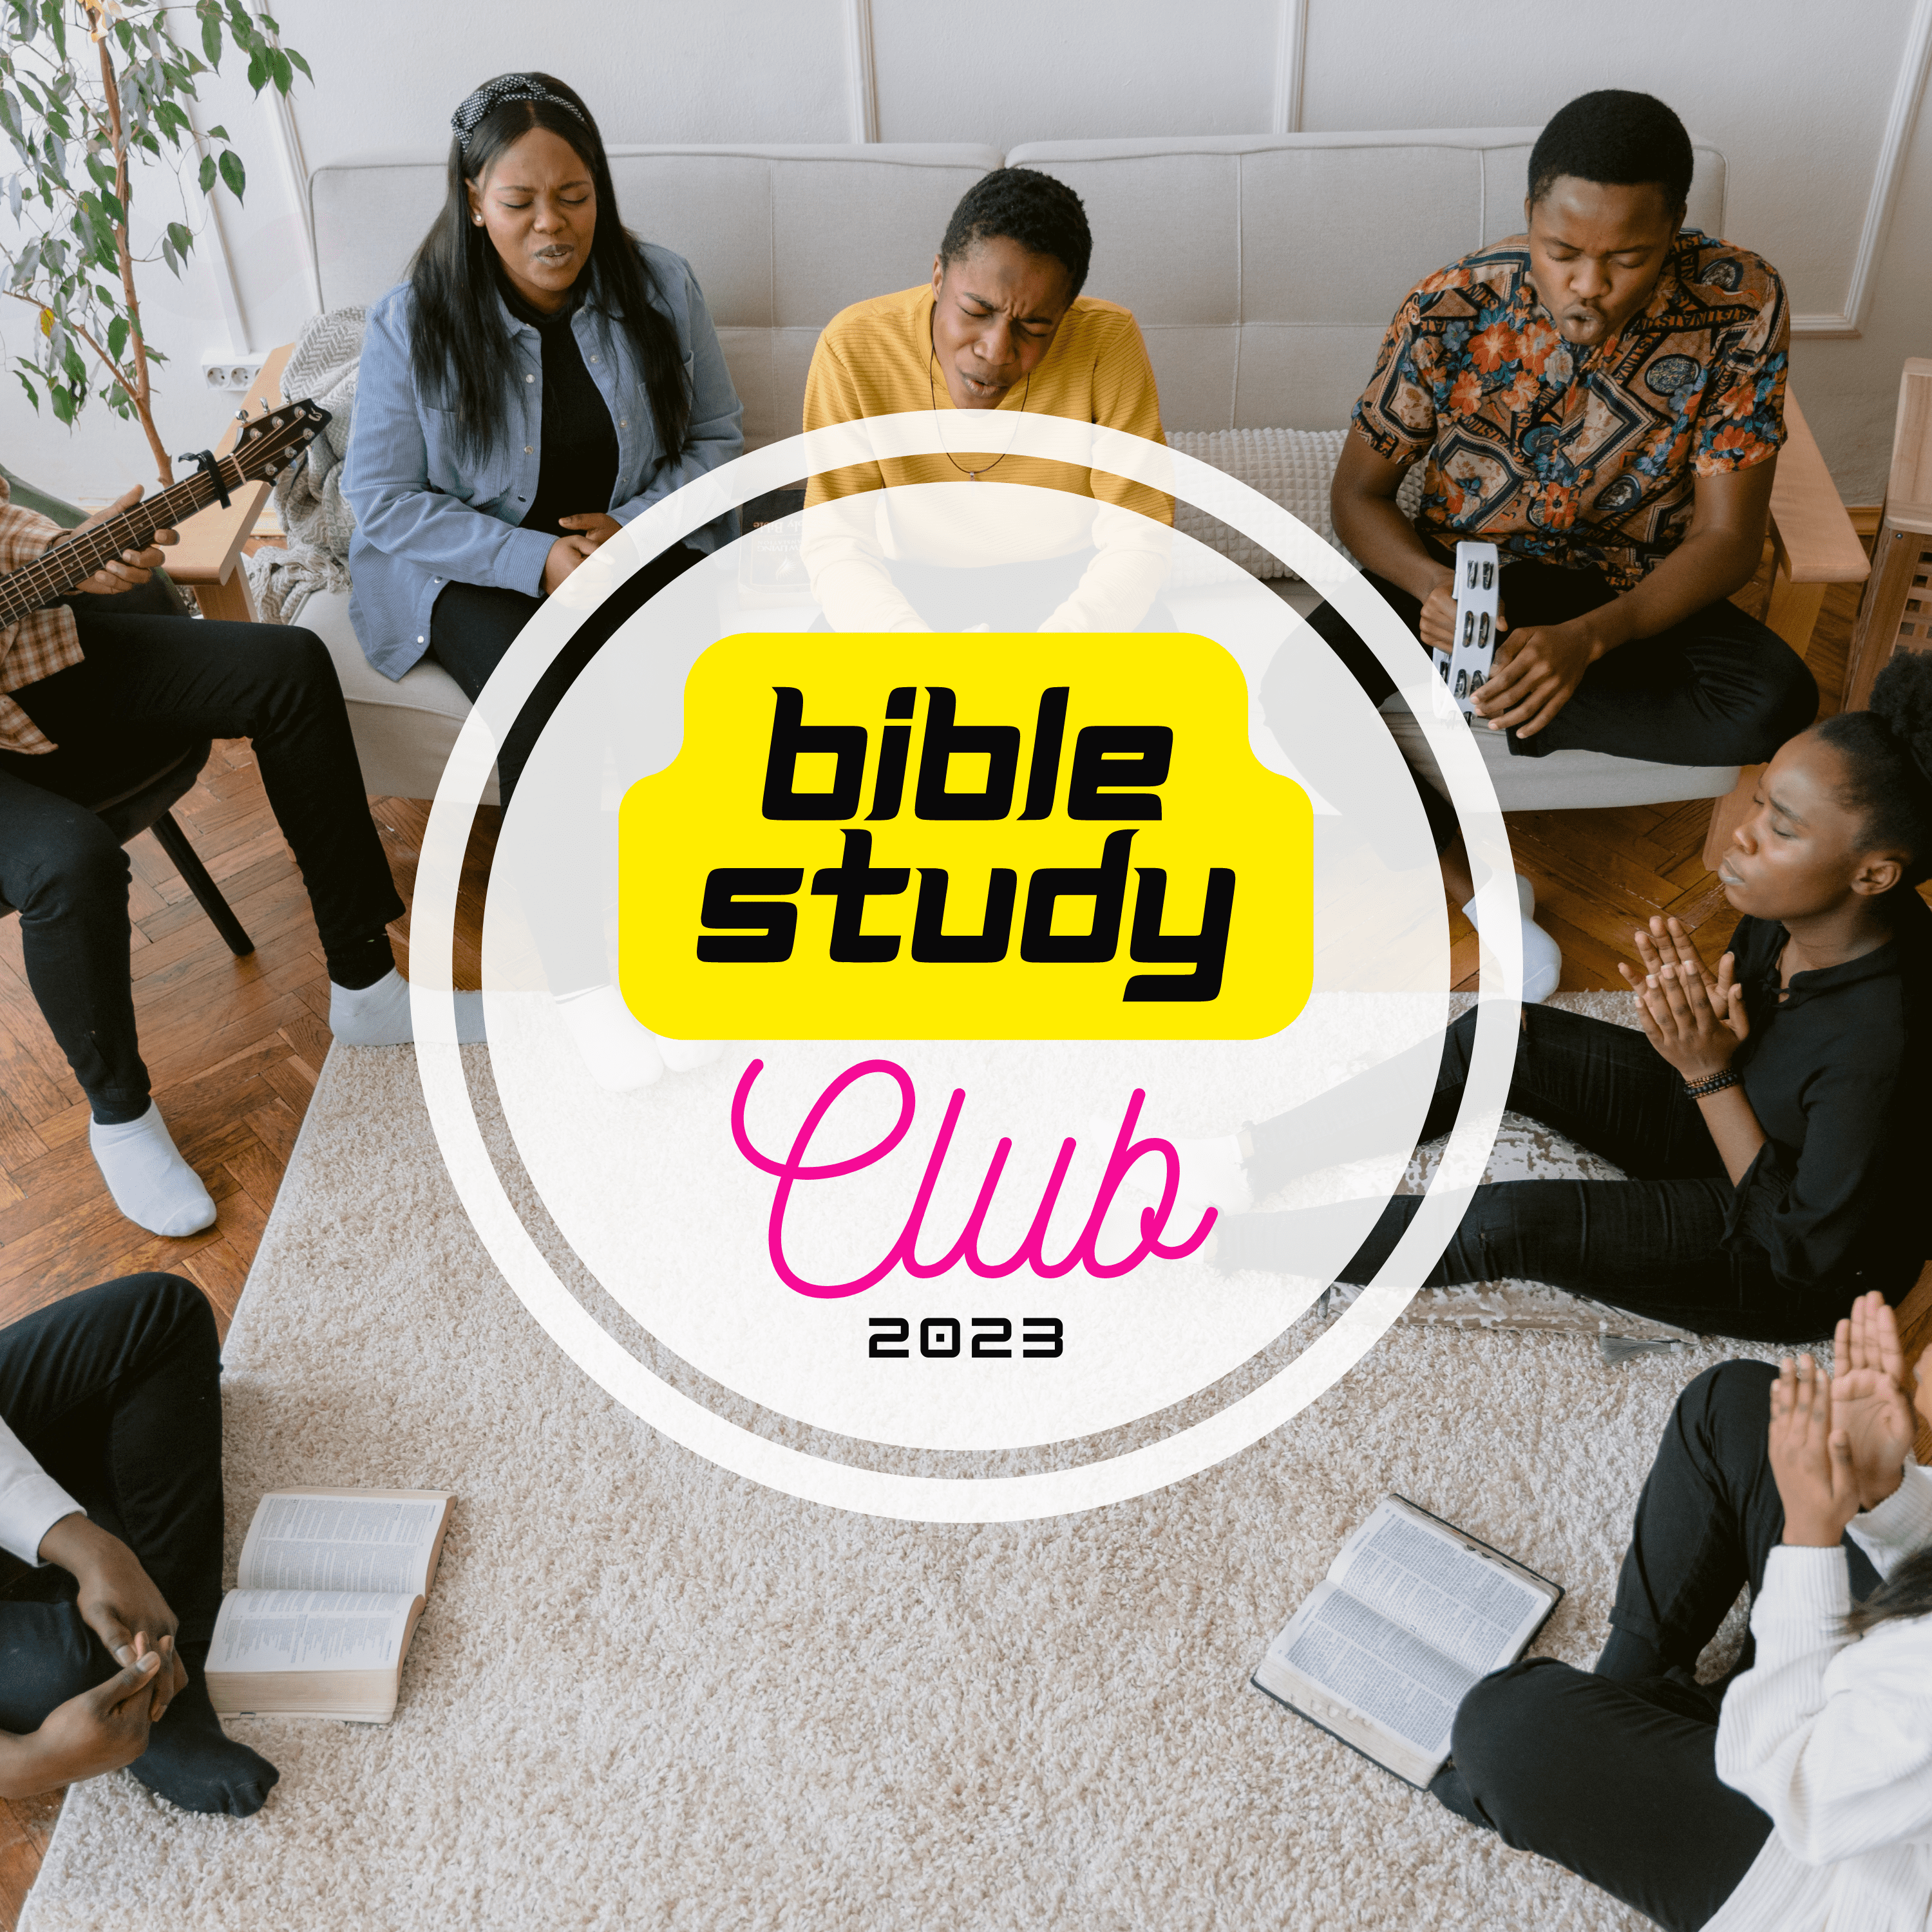 Bible Study Club